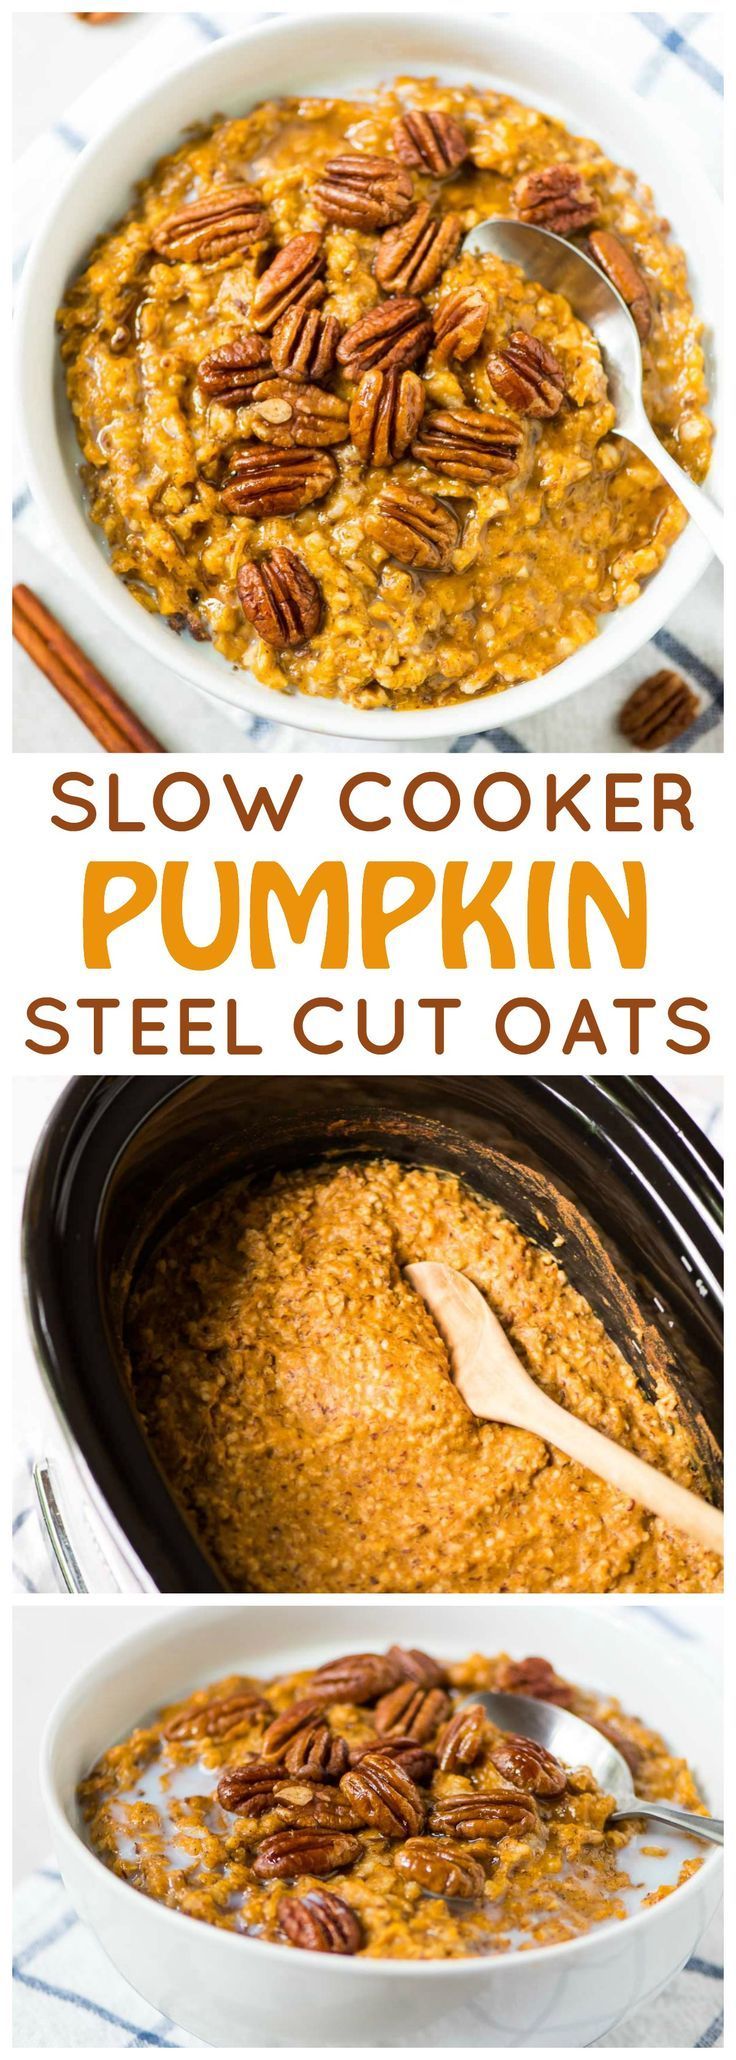 23 pumpkin recipes crockpot
 ideas